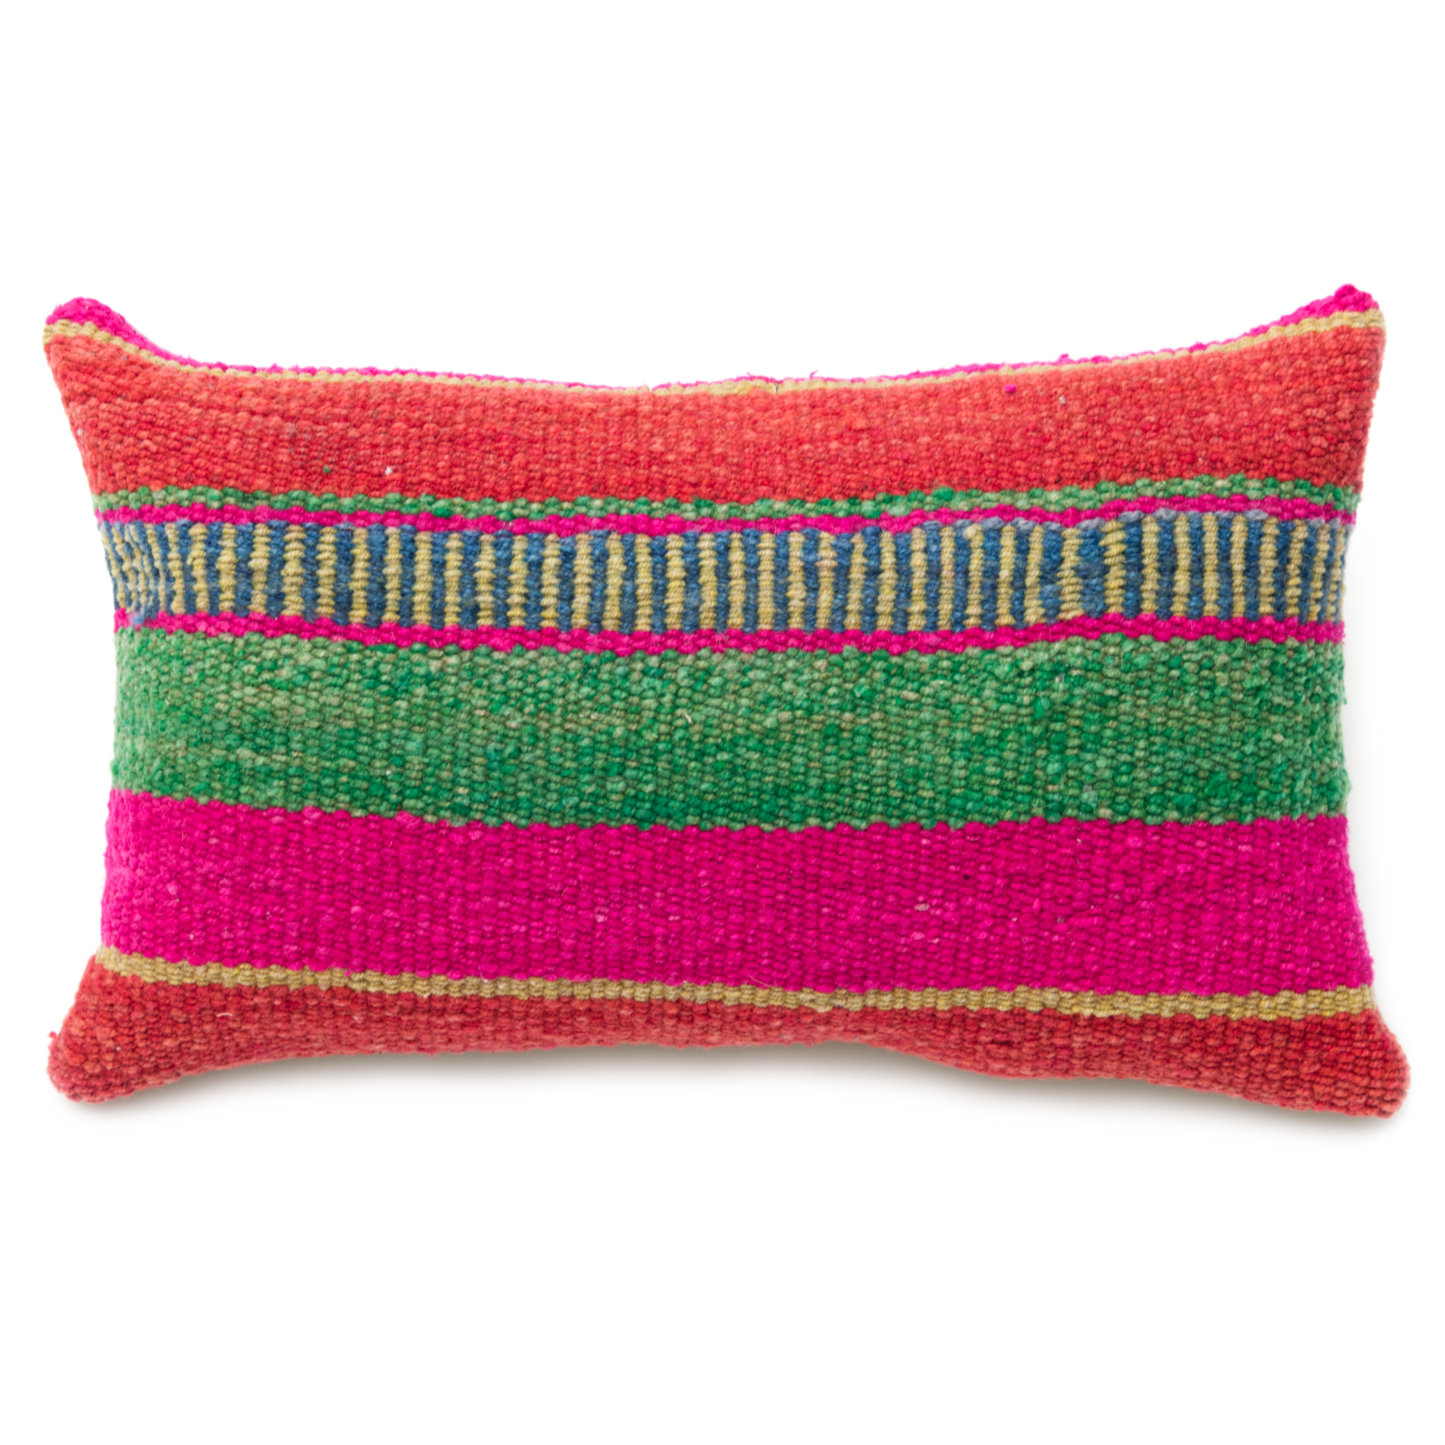 Intiearth colorful wool frazada pillow